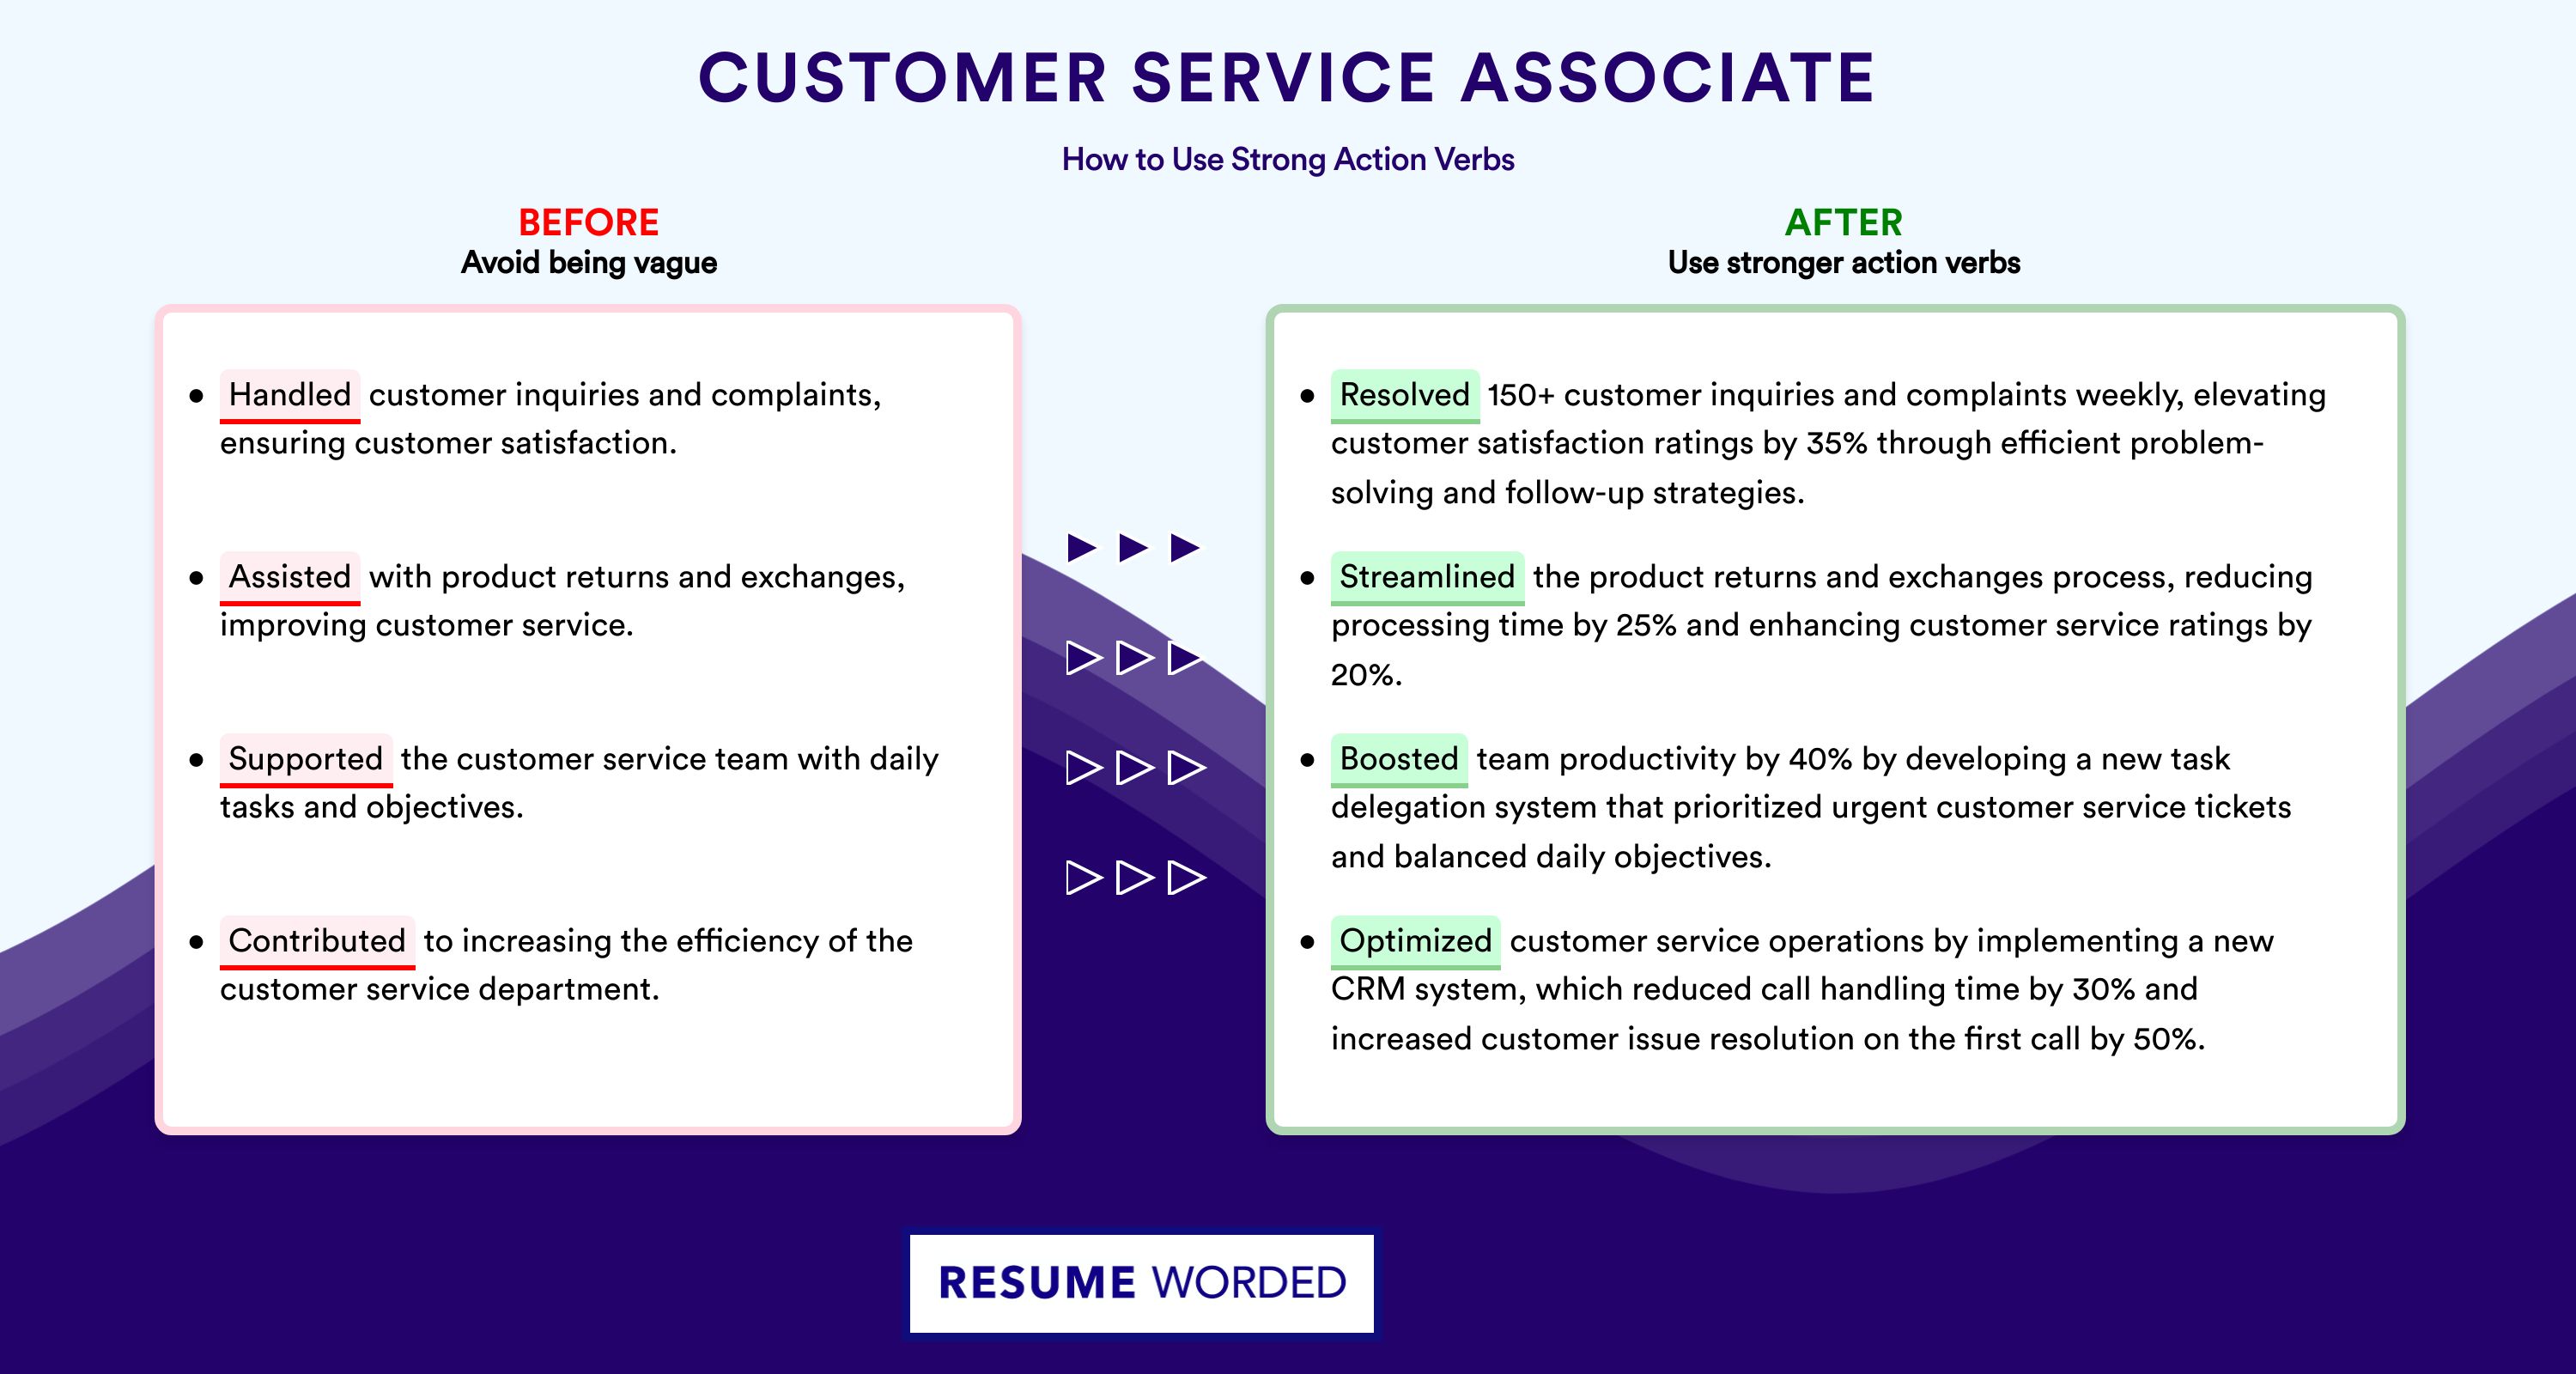 Action Verbs for Customer Service Associate